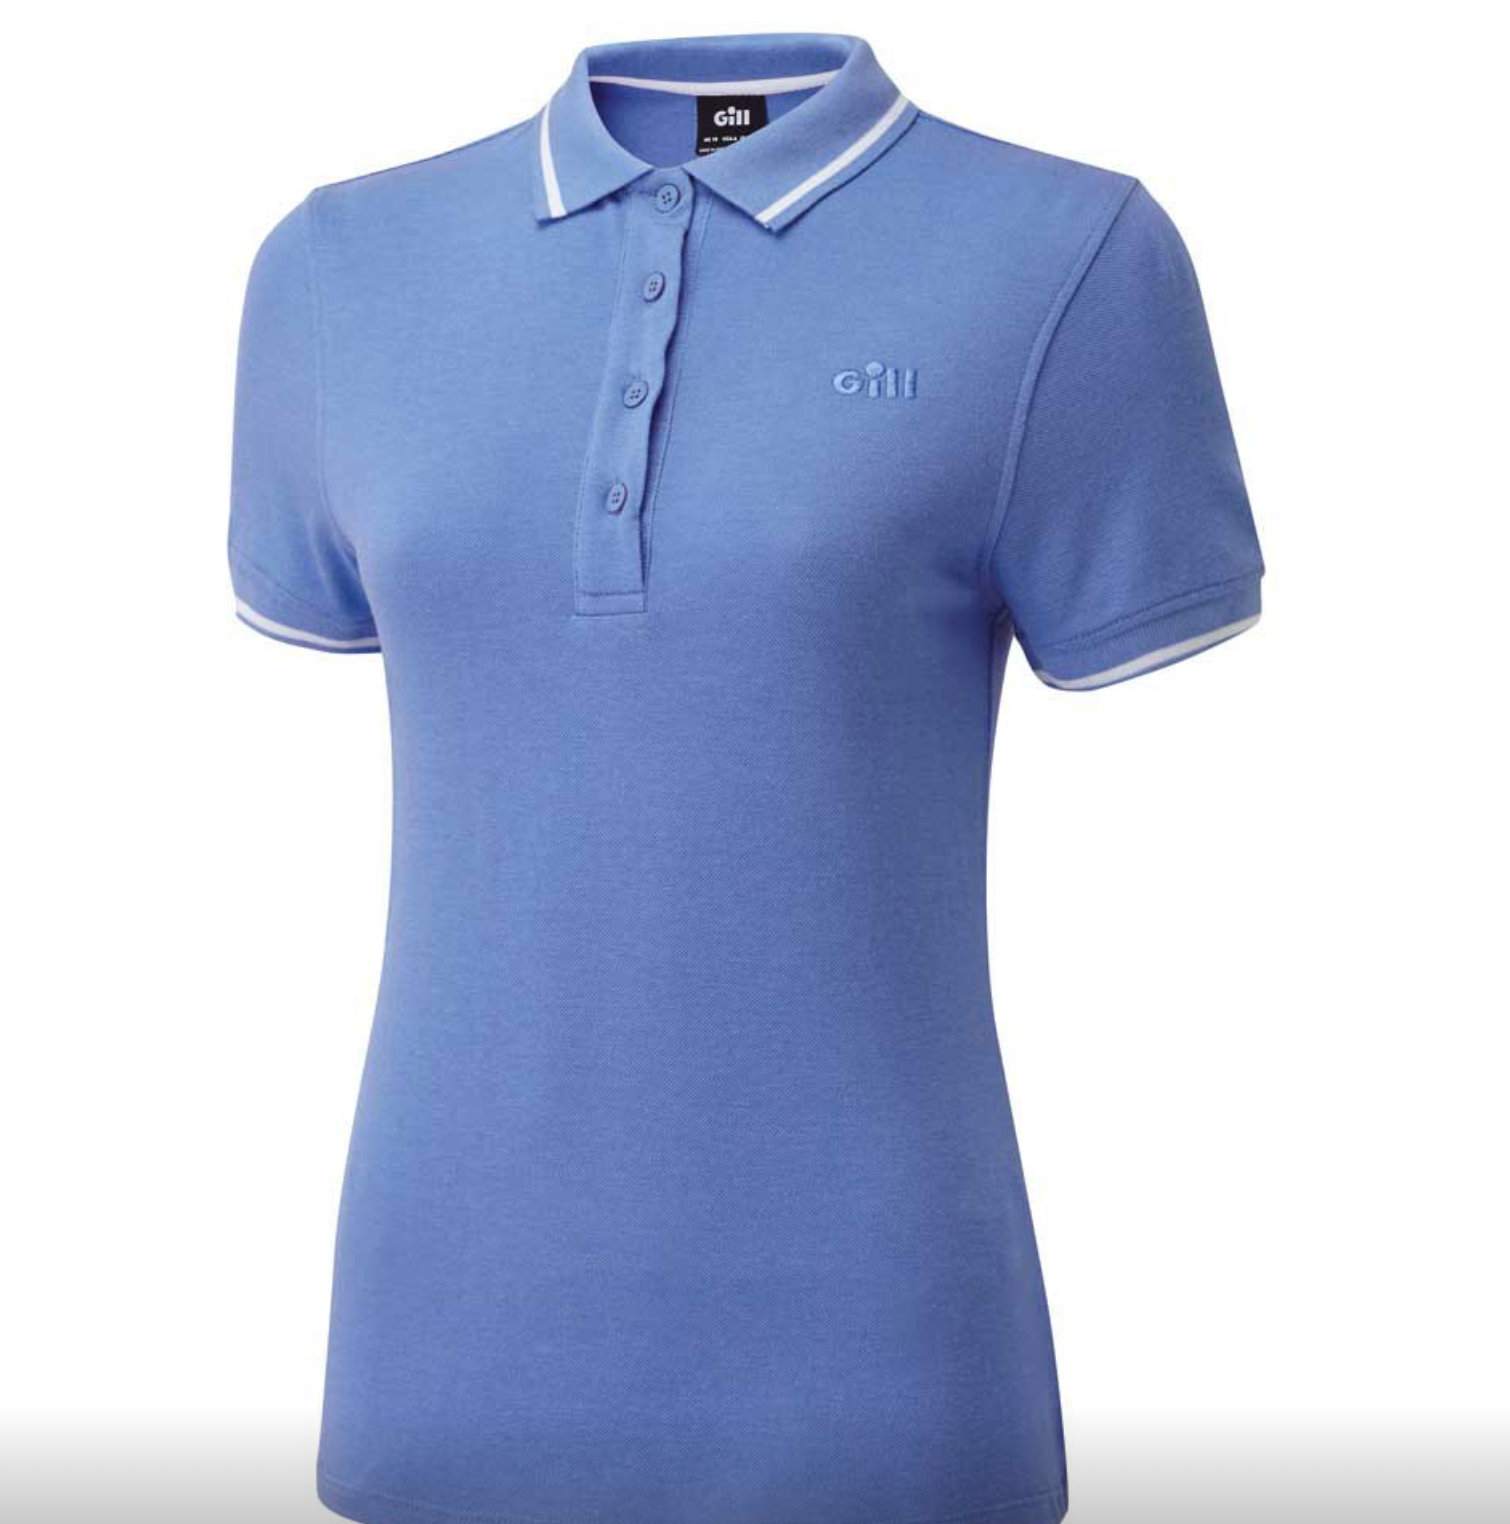 Women's Gill Crew Polo Shirts - Light Blue - Size 10